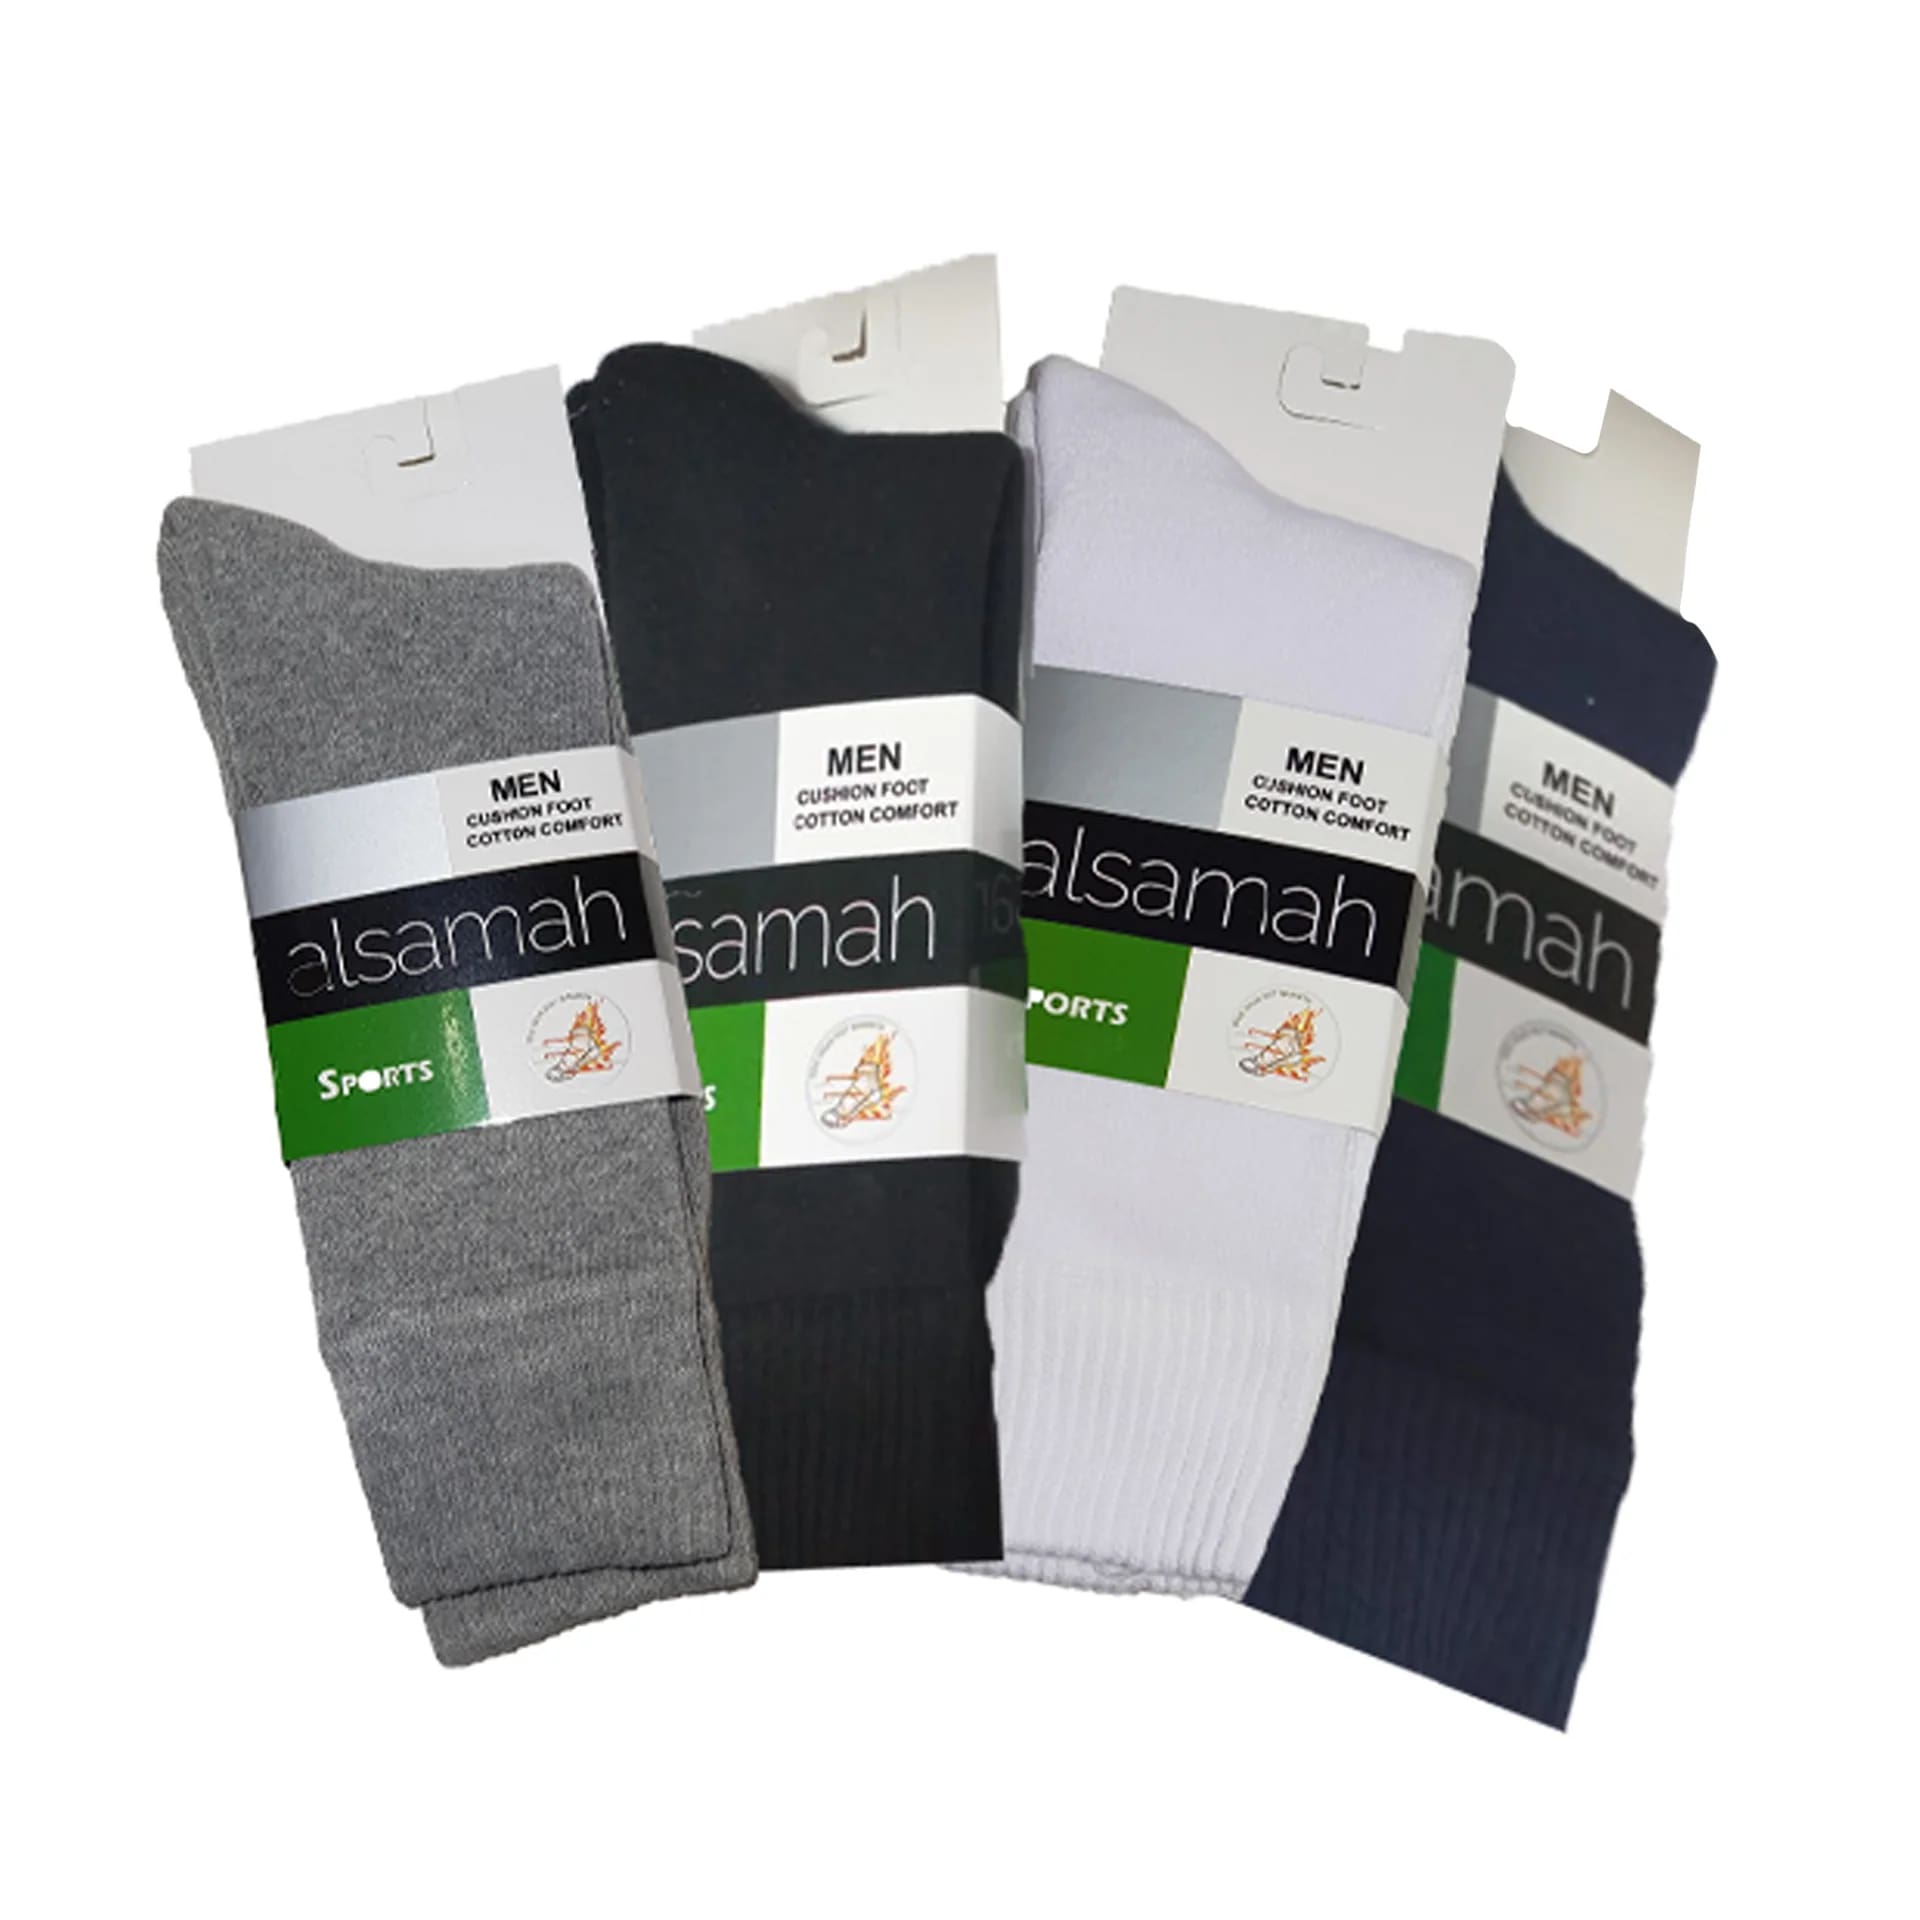 Men's Bashkir socks from Dark Gray color al samah